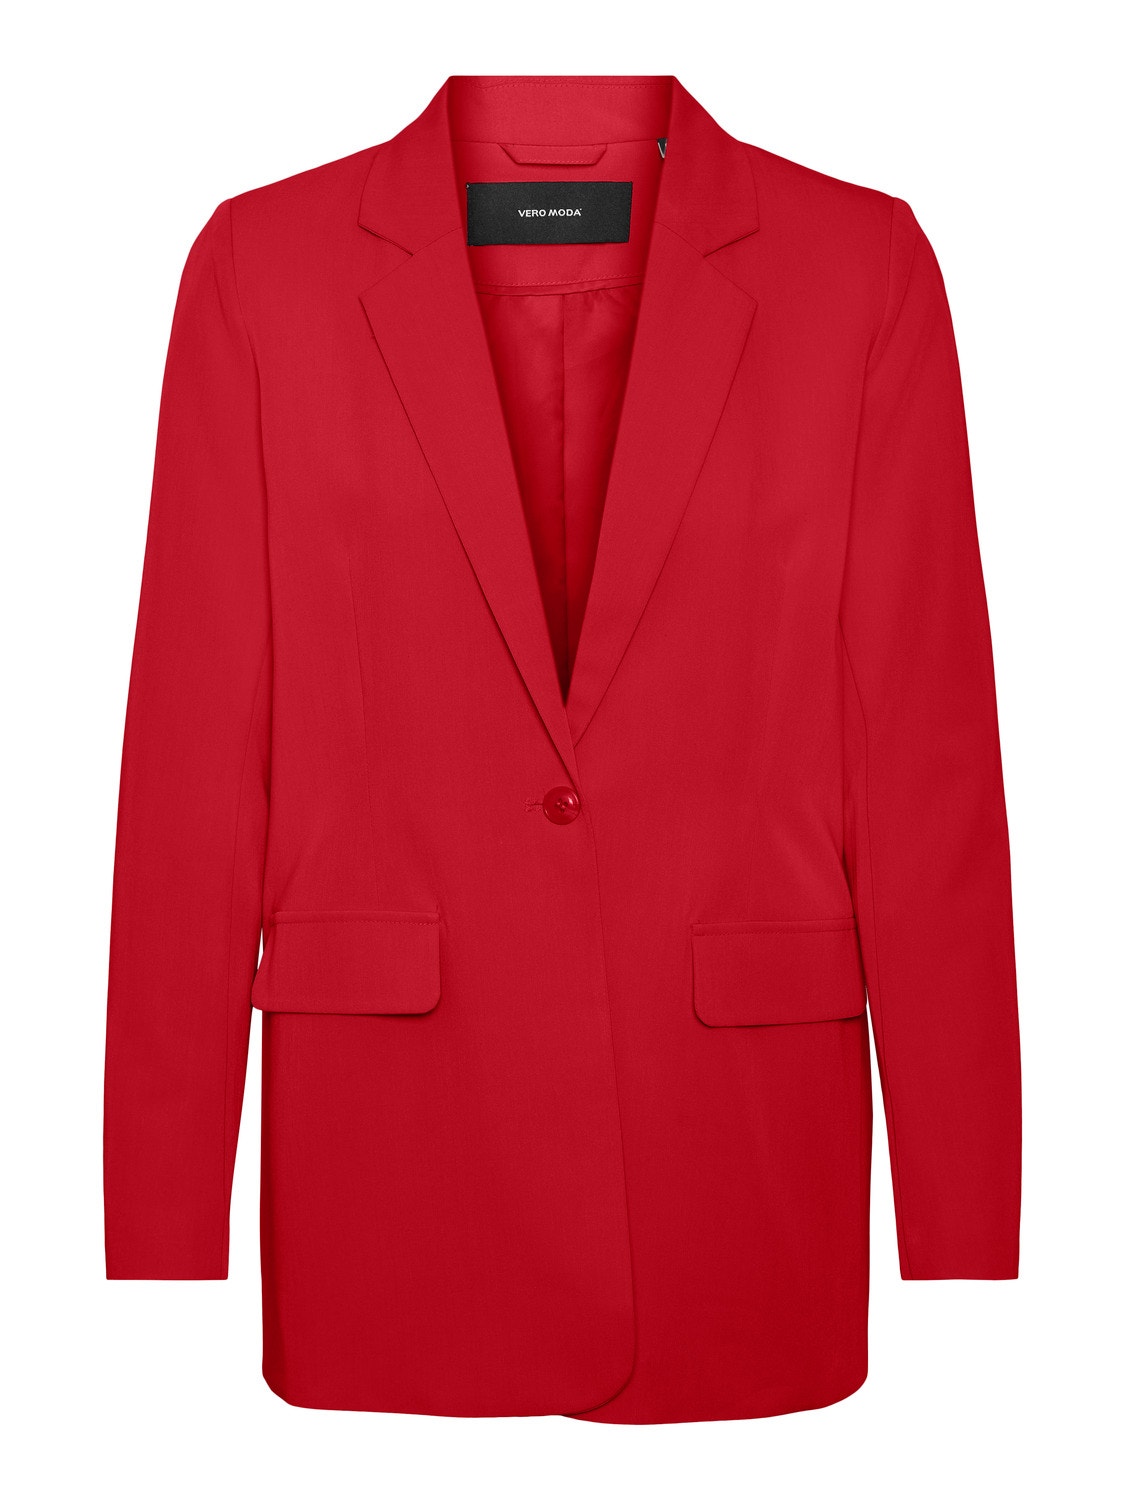 Classic blazer with 40% discount! | Vero Moda®